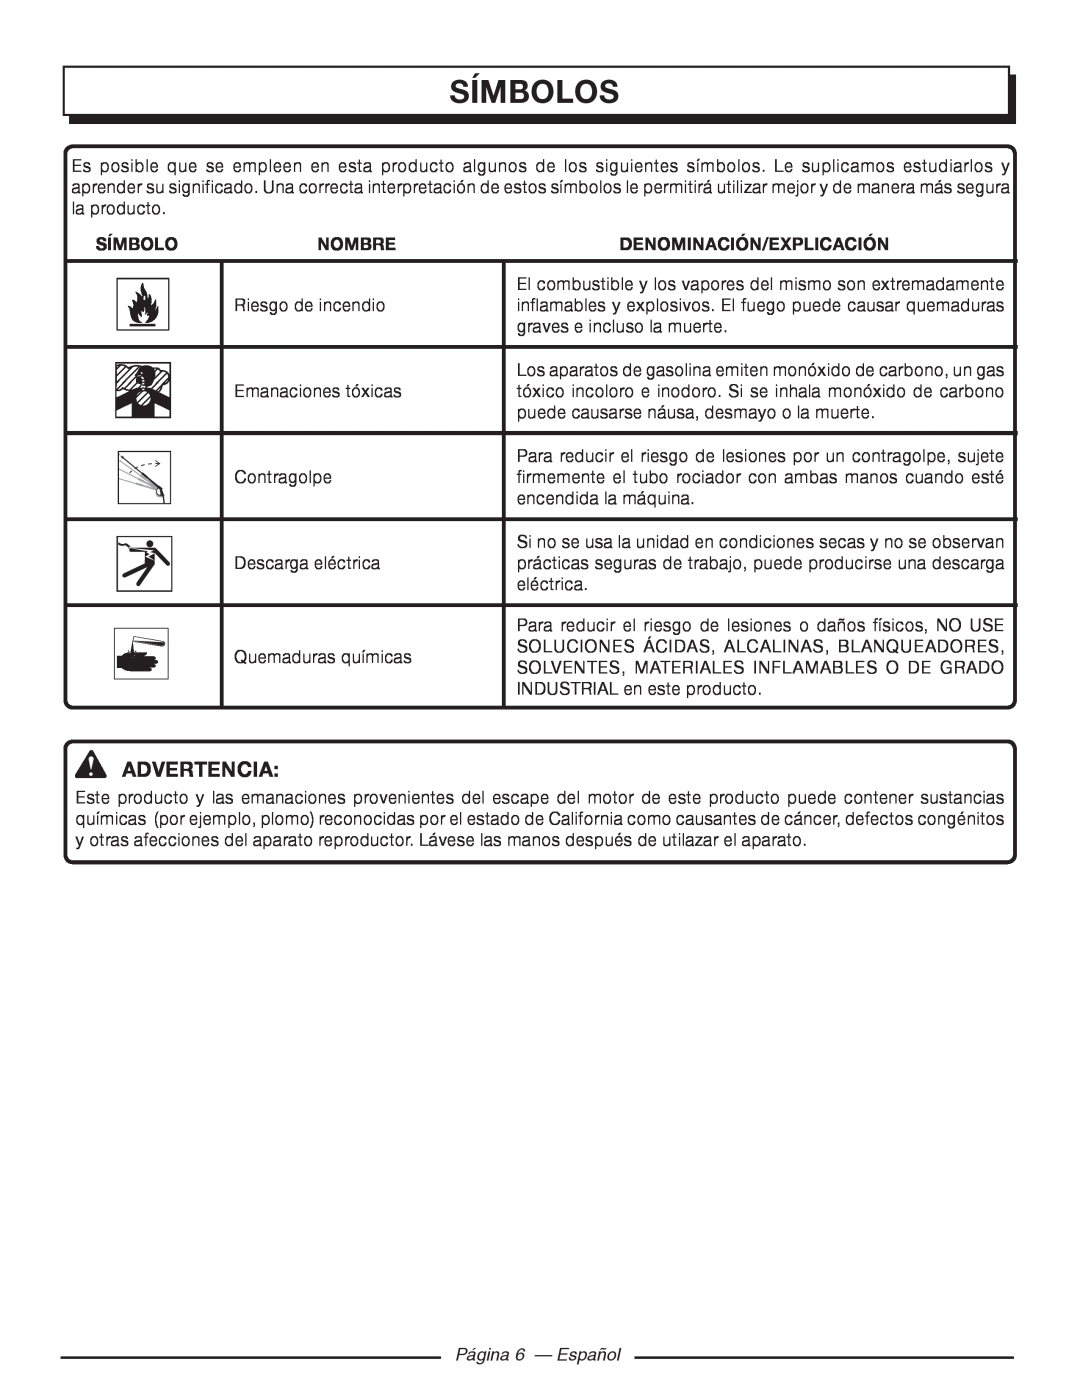 Homelite UT80953, UT80522 manuel dutilisation Página 6 - Español, Símbolos, Advertencia 